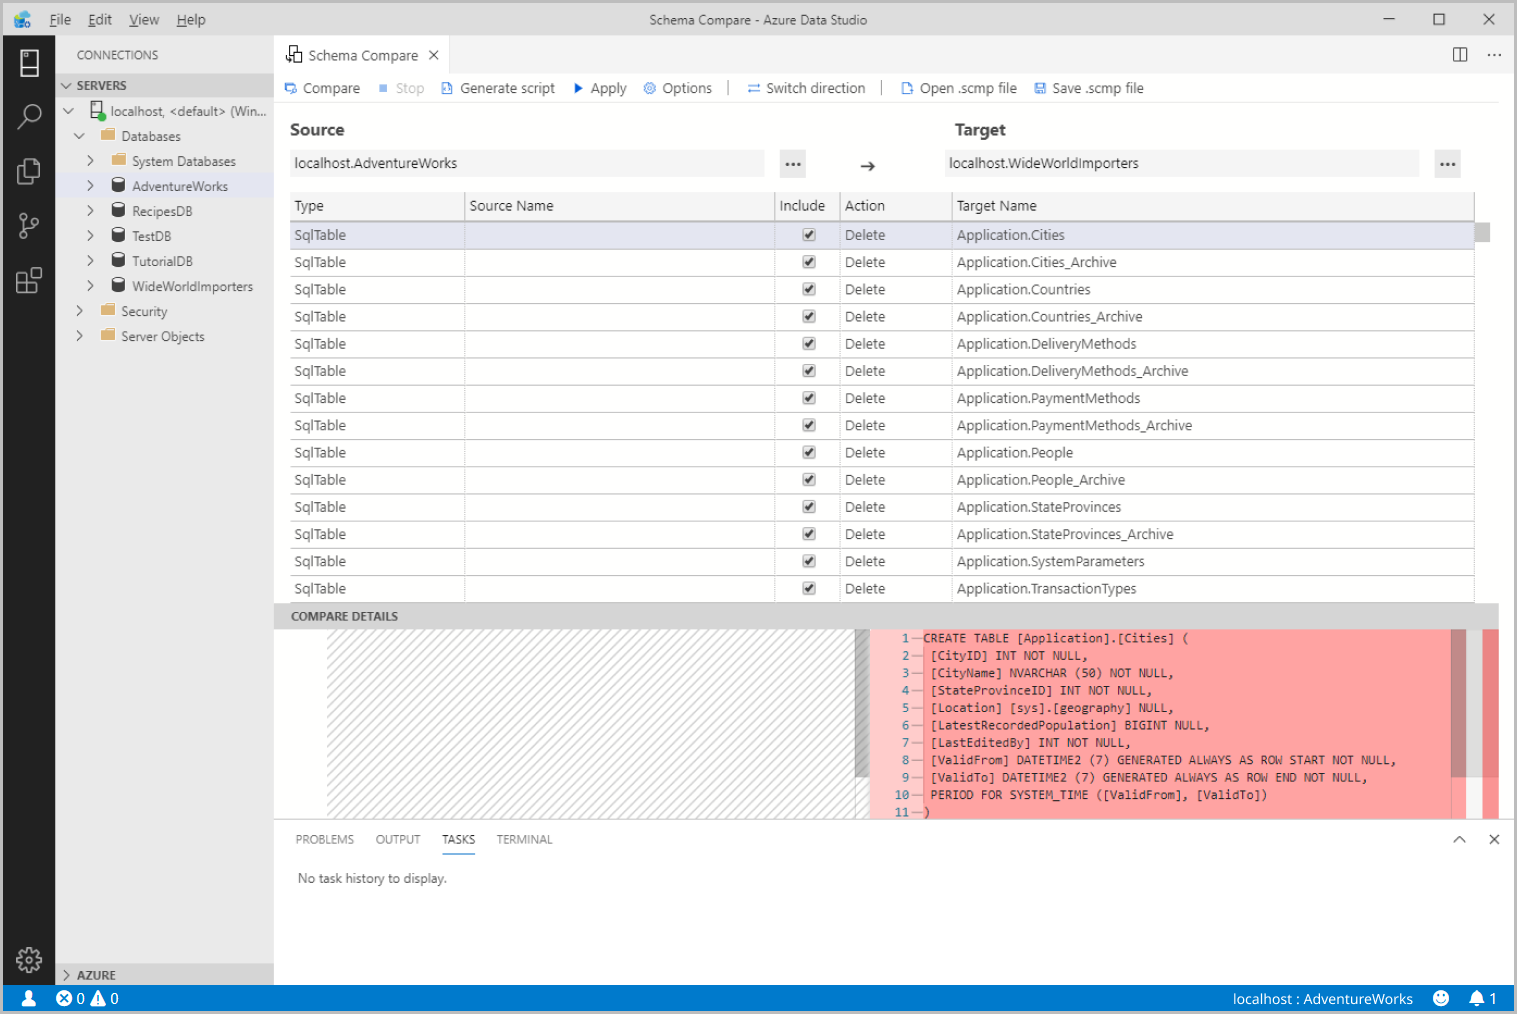 Screenshot of the Azure Data Studio G U I, comparing schemas.